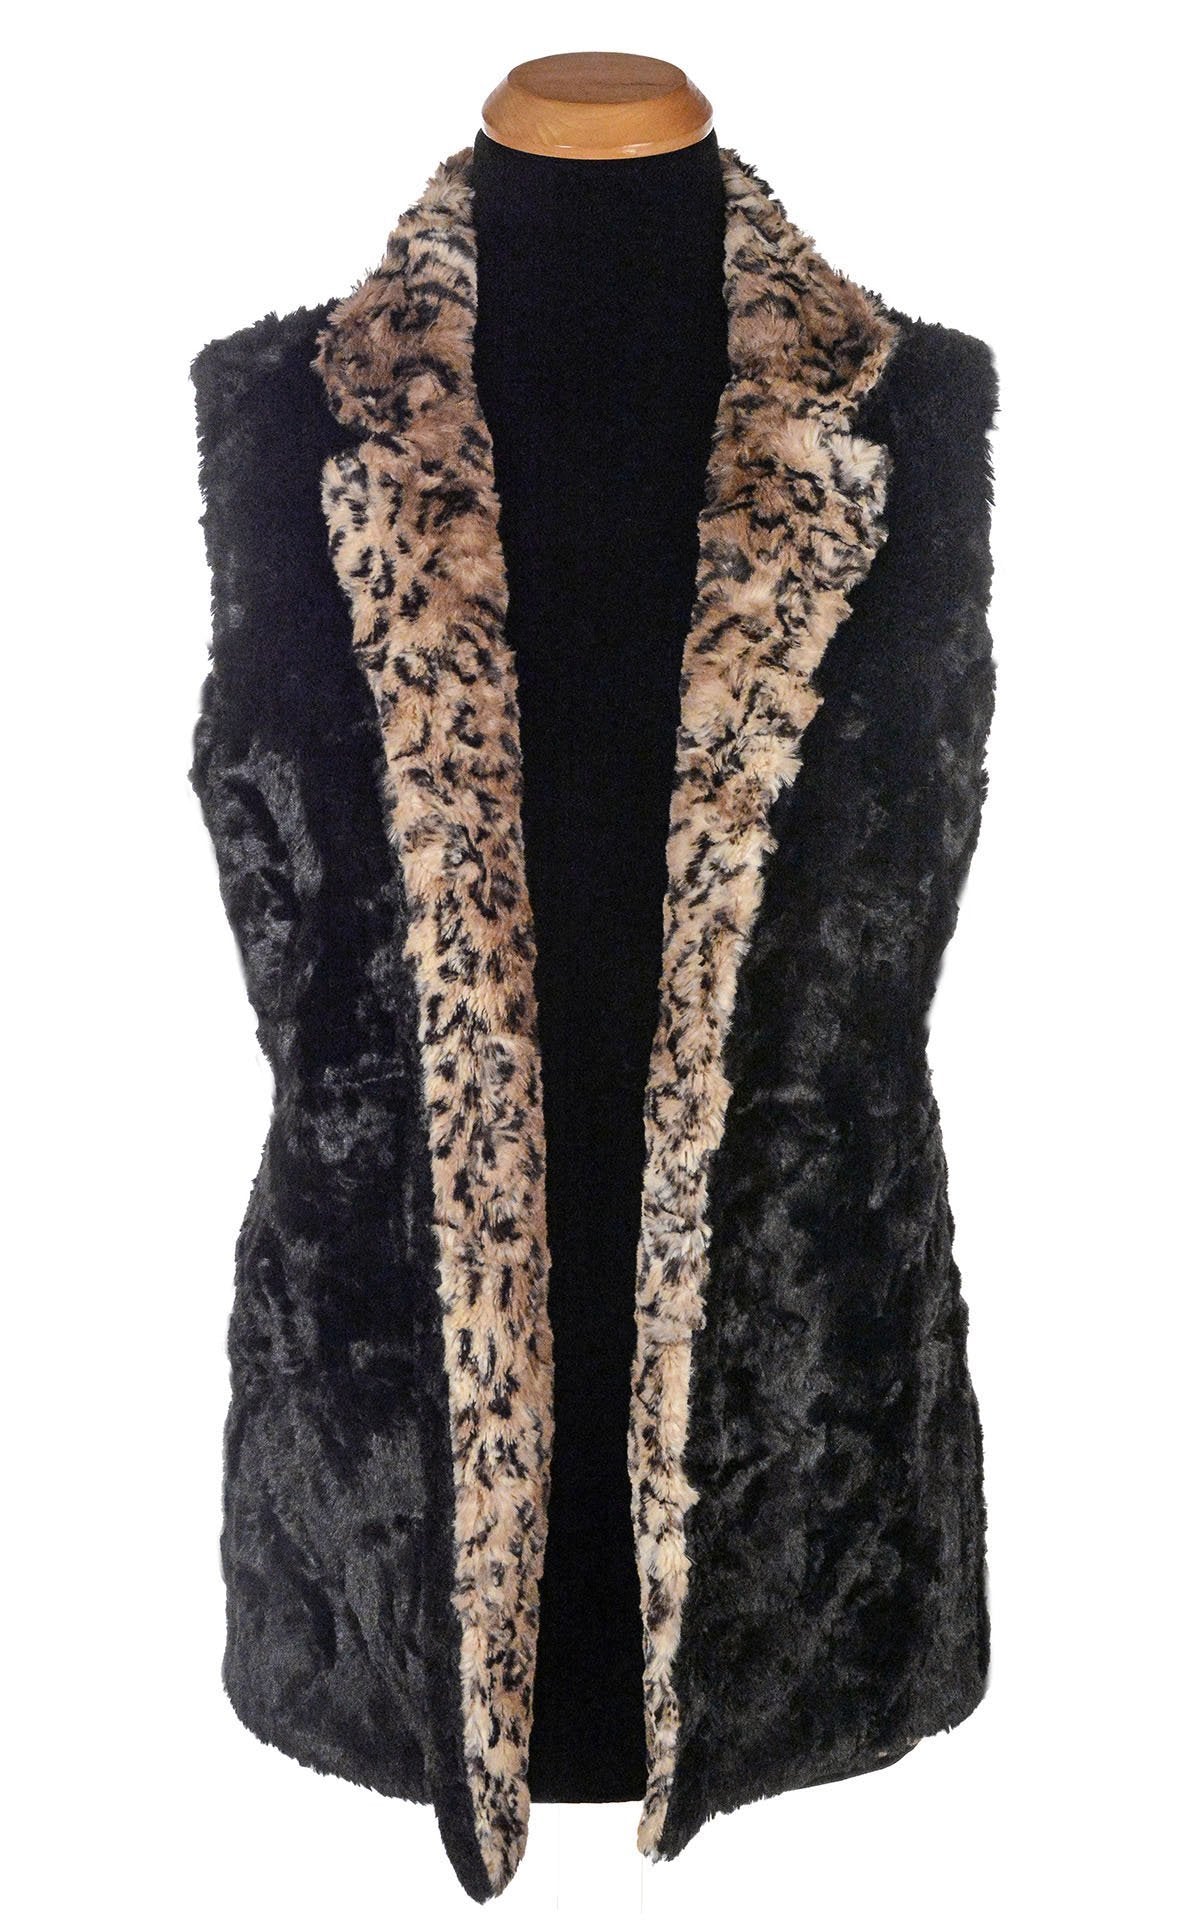 Mandarin Vest Short Reversed | Carpathian Lynx Brown, Tan, and Black Animal Print and Cuddly Black Faux Fur | Reversible | Handmade in Seattle WA | Pandemonium Millinery